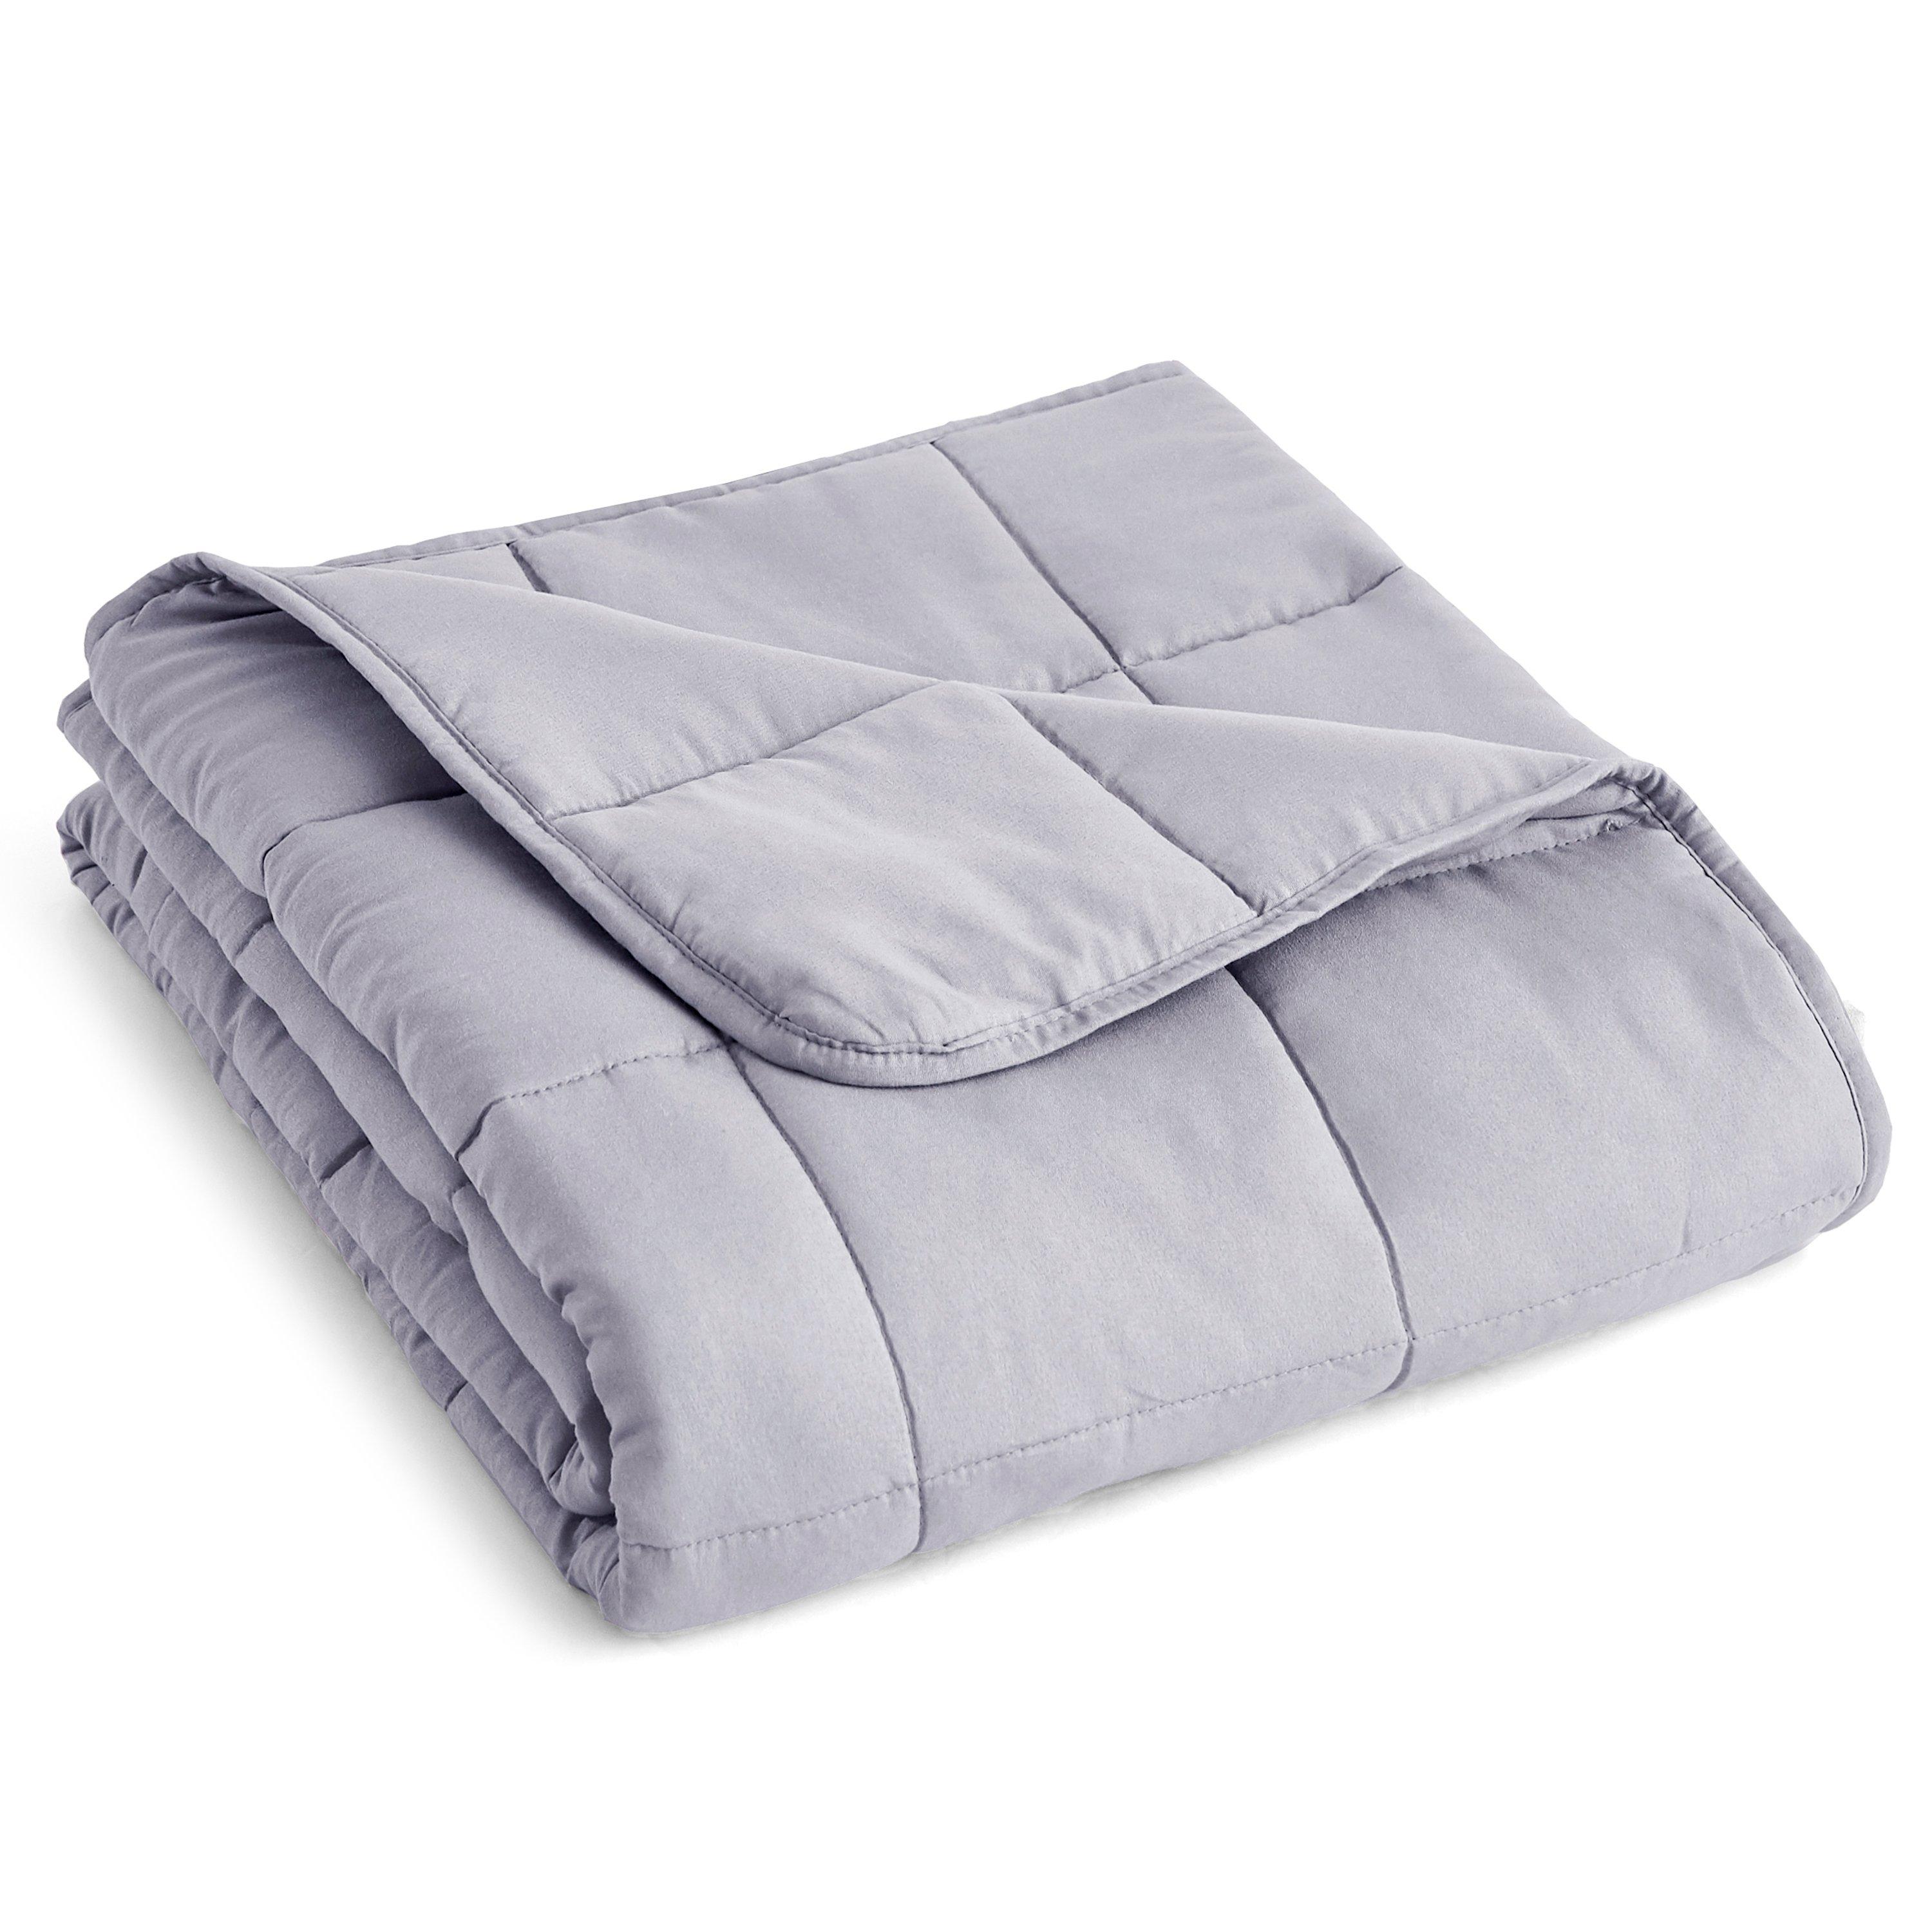 Prima Comfort Microfiber 12 lb Weighted Blanket